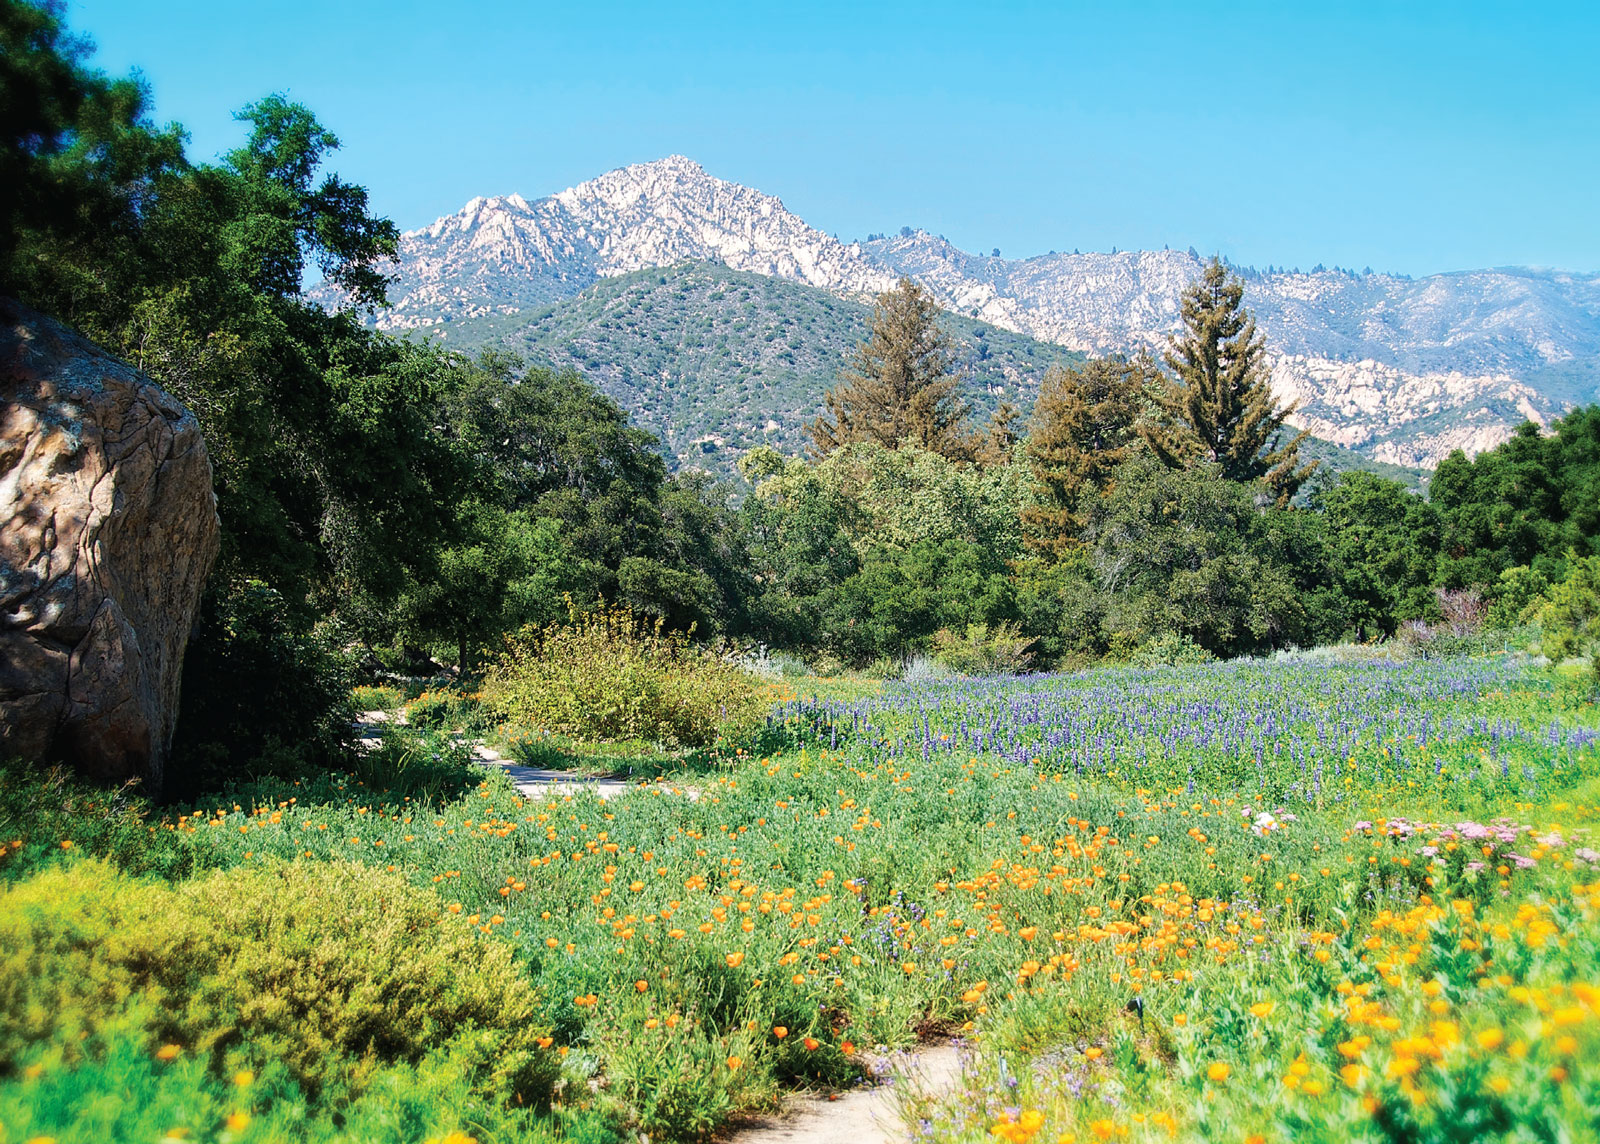 The Meadow at The Santa Barbara Botanic Garden